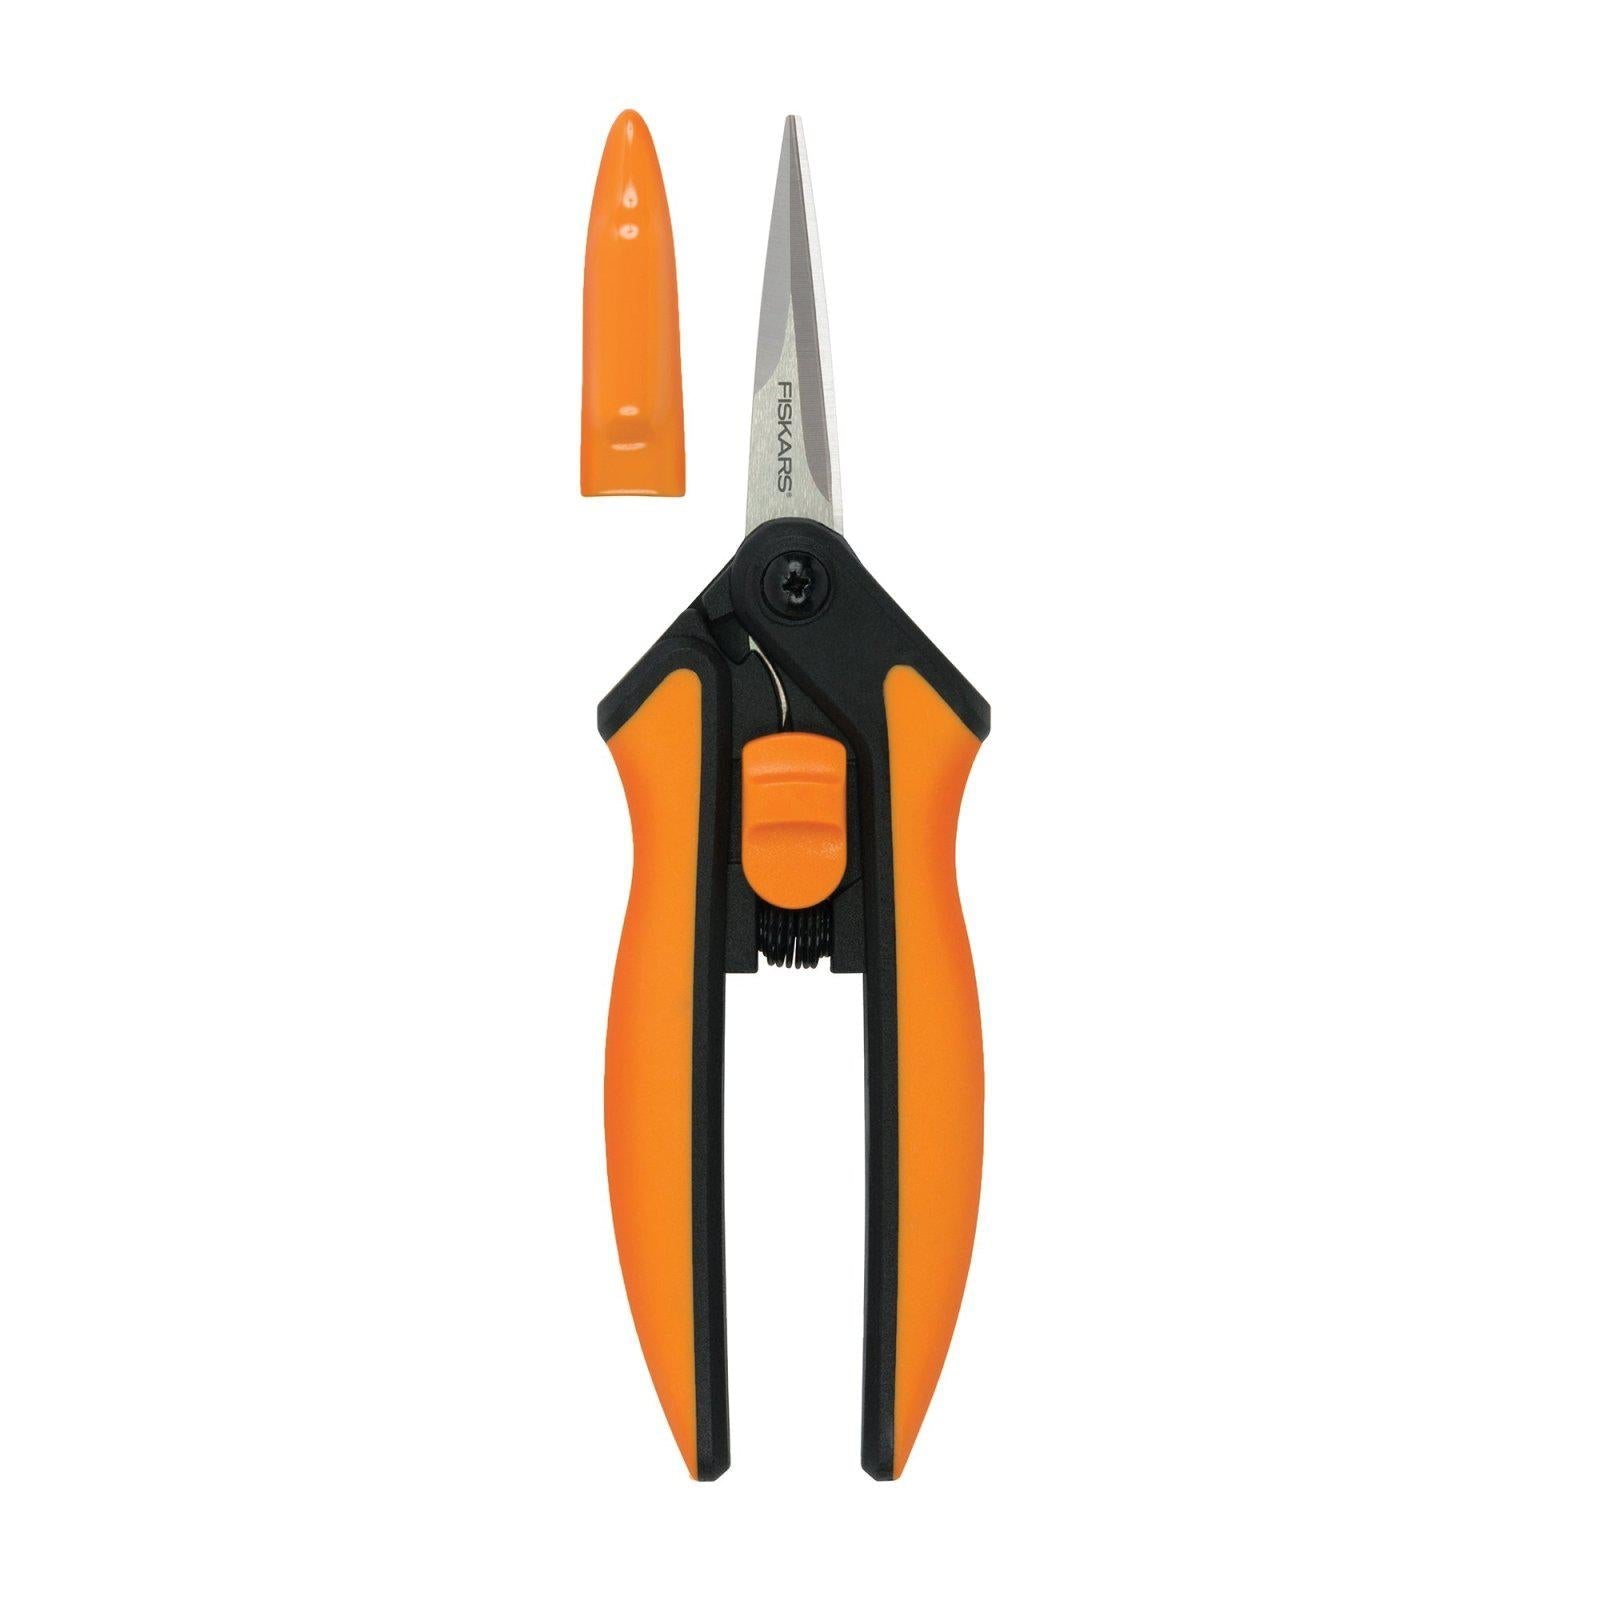 Accessories - Fiskars Softouch Micro Tip Pruning Snips - 046561006549- Gardin Warehouse